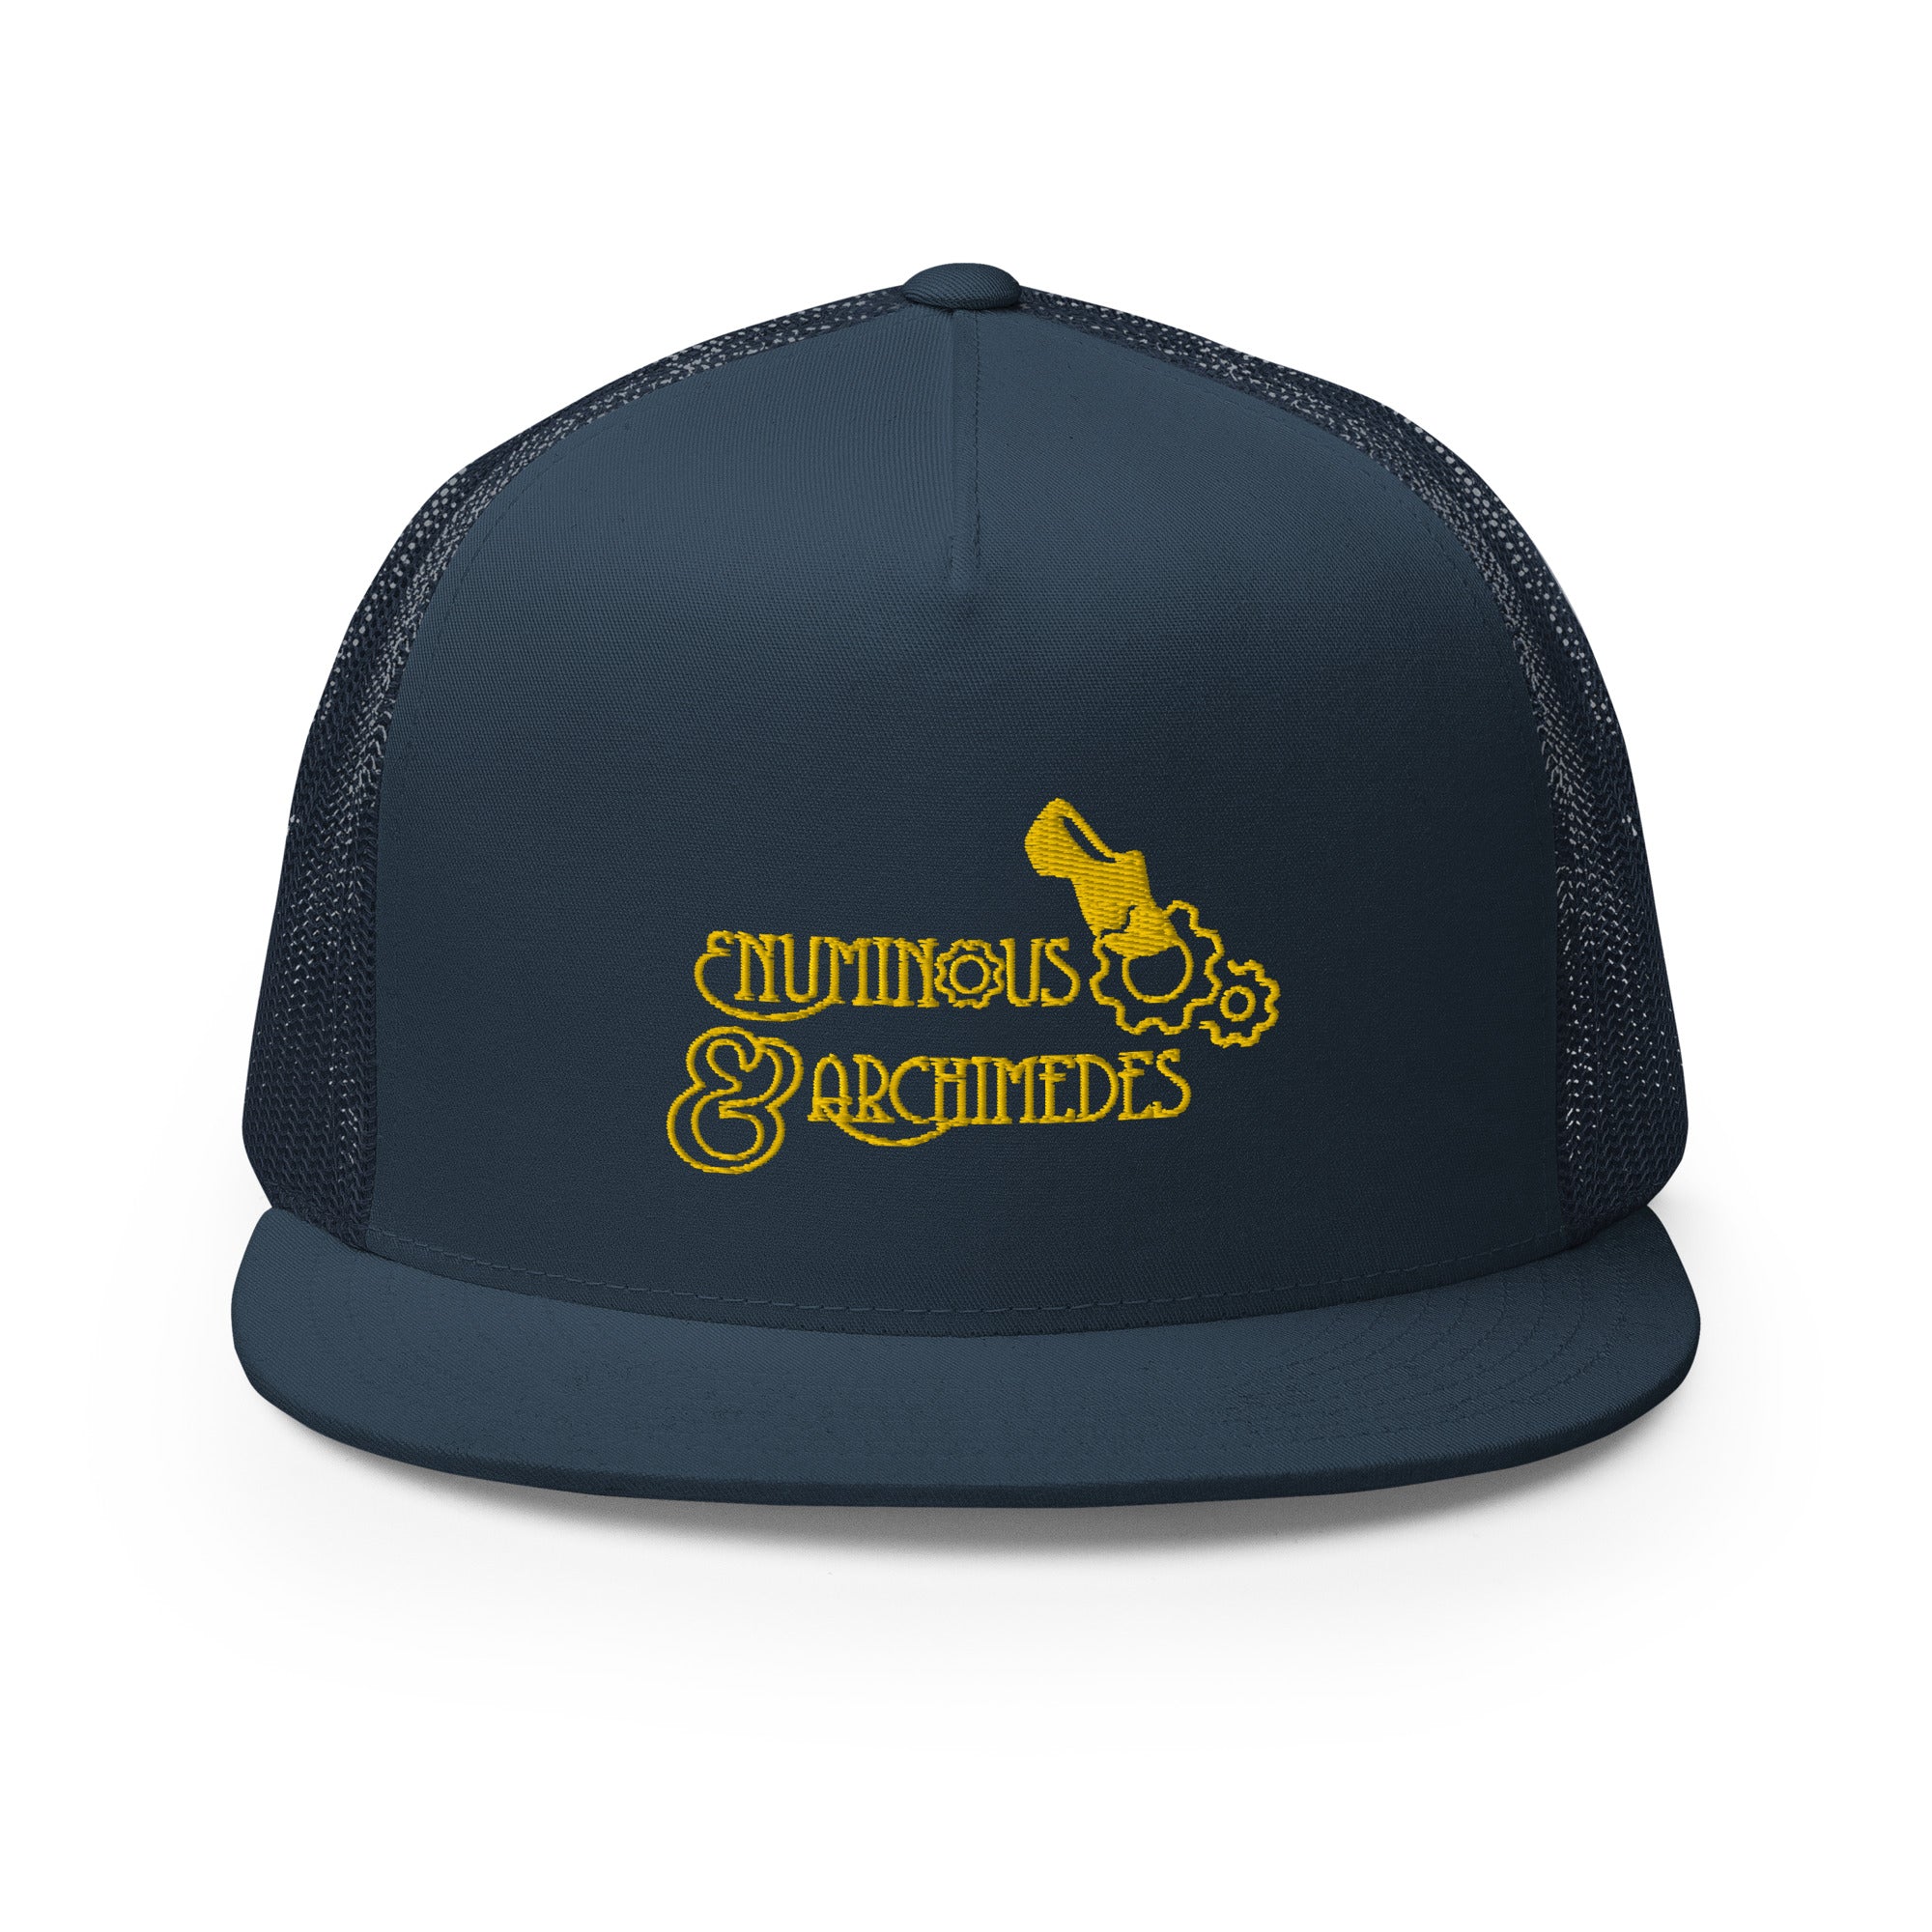 eNuminous & Archimedes - Trucker Cap